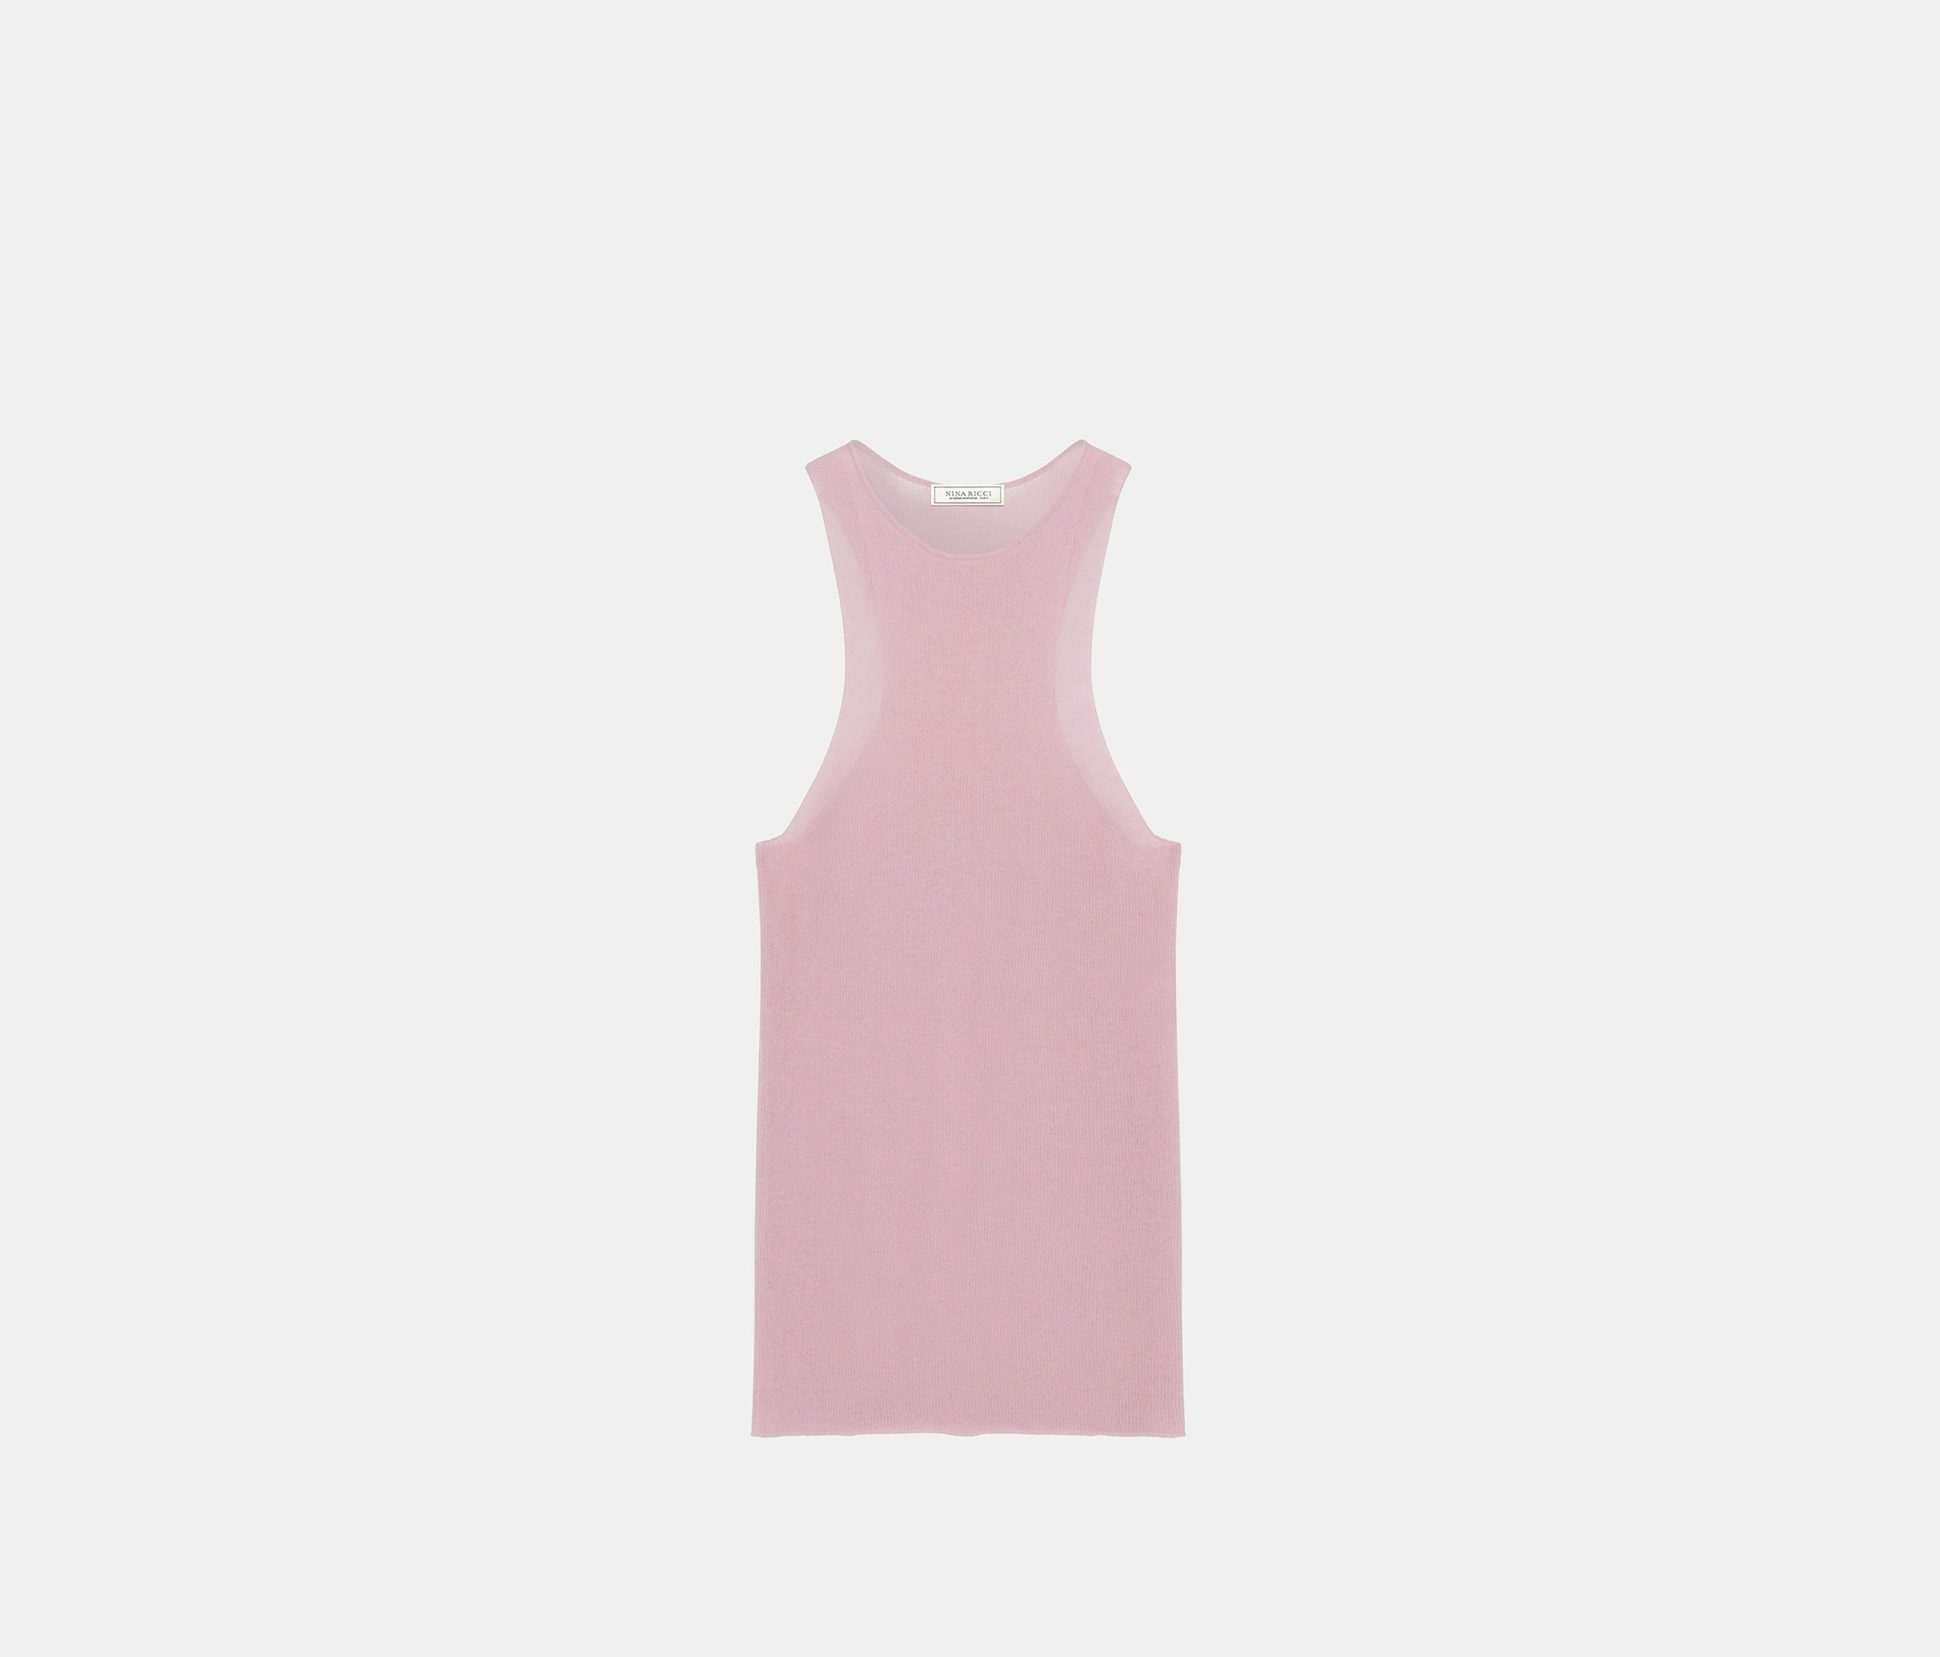 Camiseta sin mangas de punto fino rosa - Nina Ricci